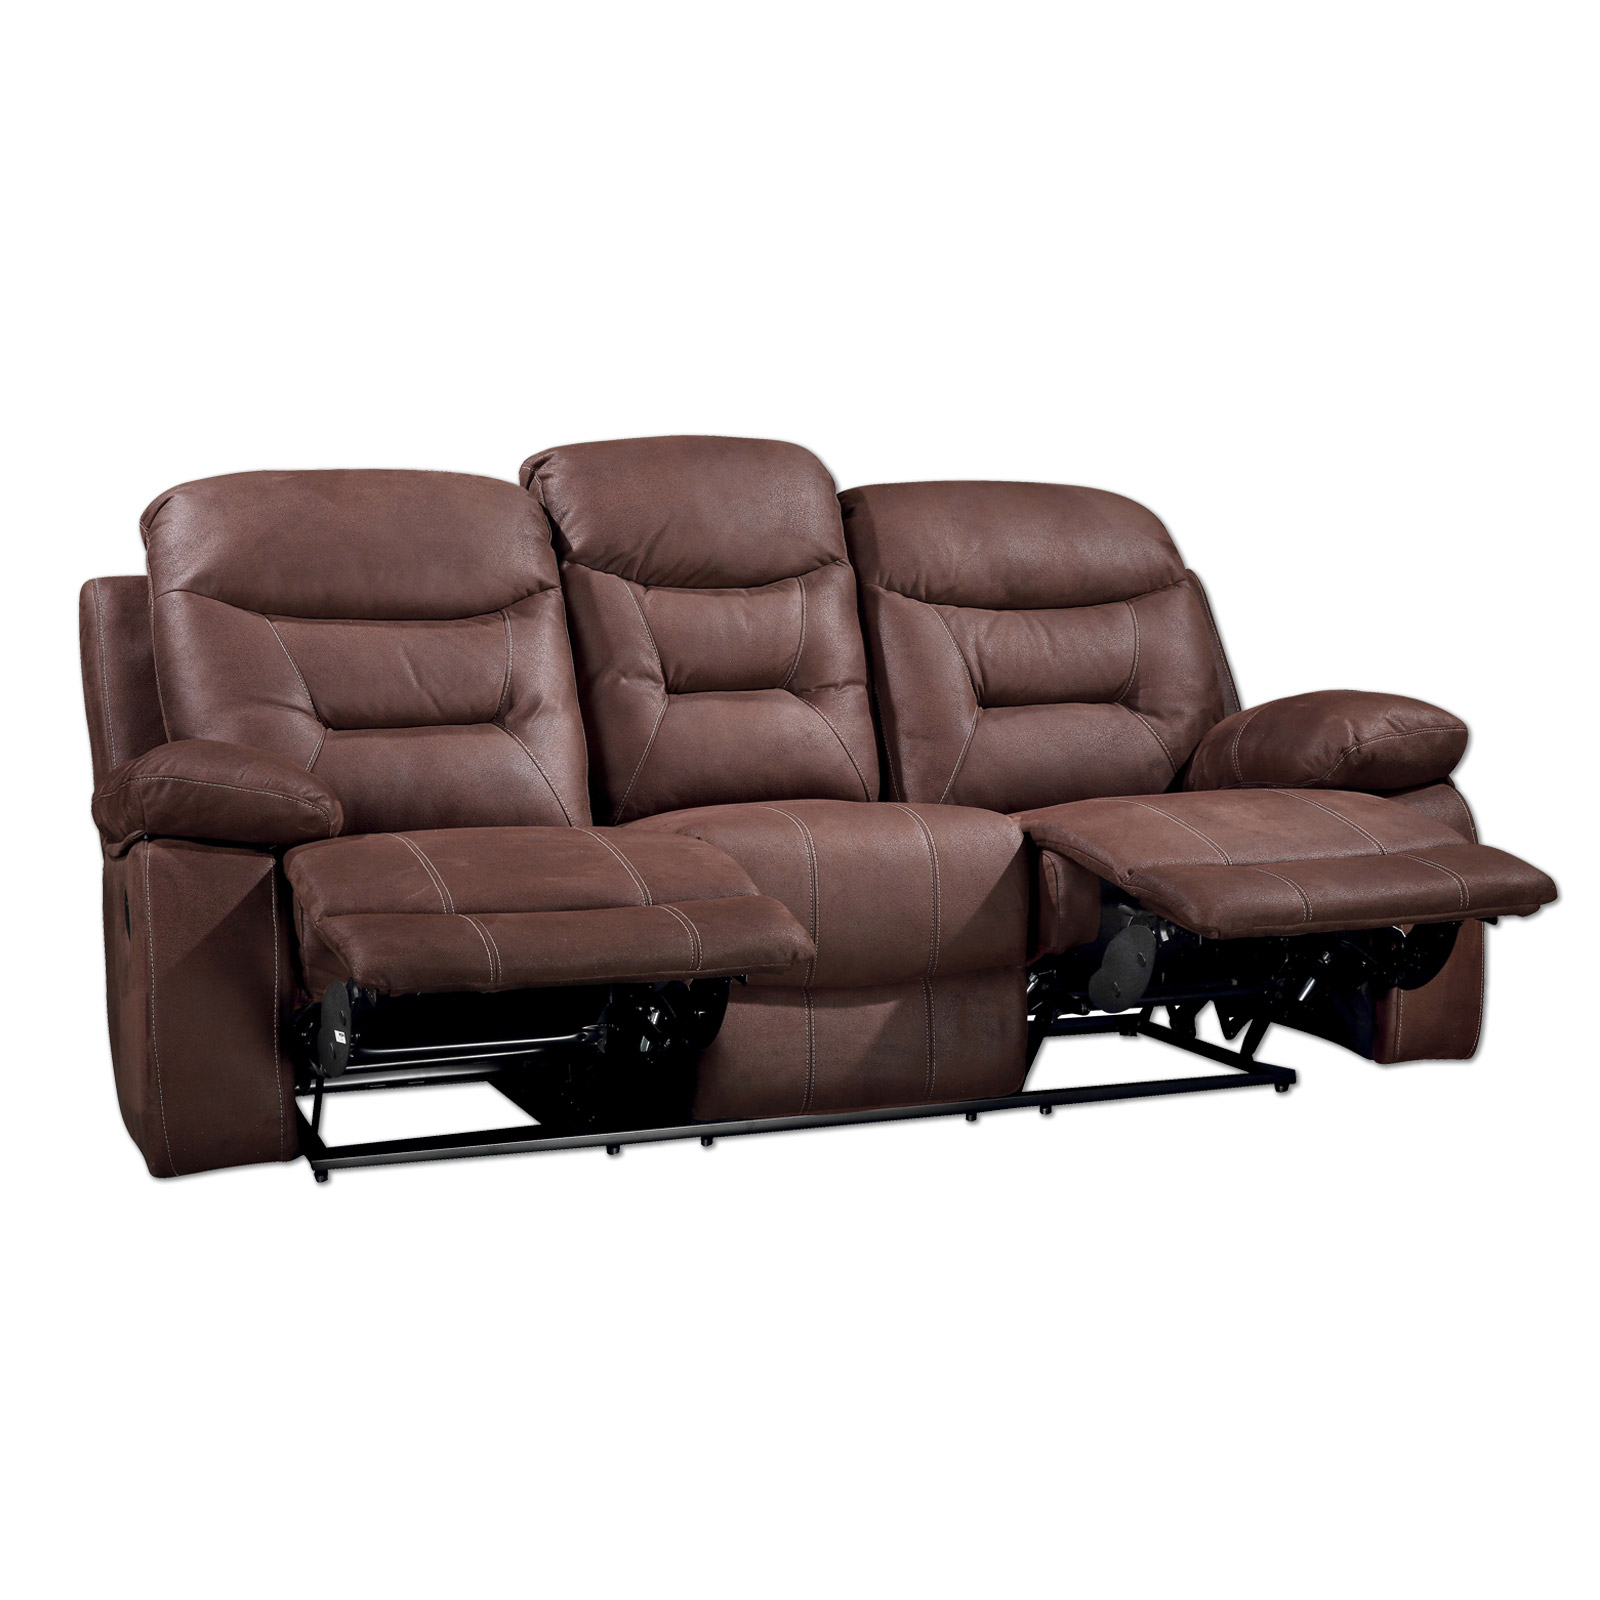 3-Sitzer-Sofa - braun - Relaxfunktion | Online bei ROLLER ...